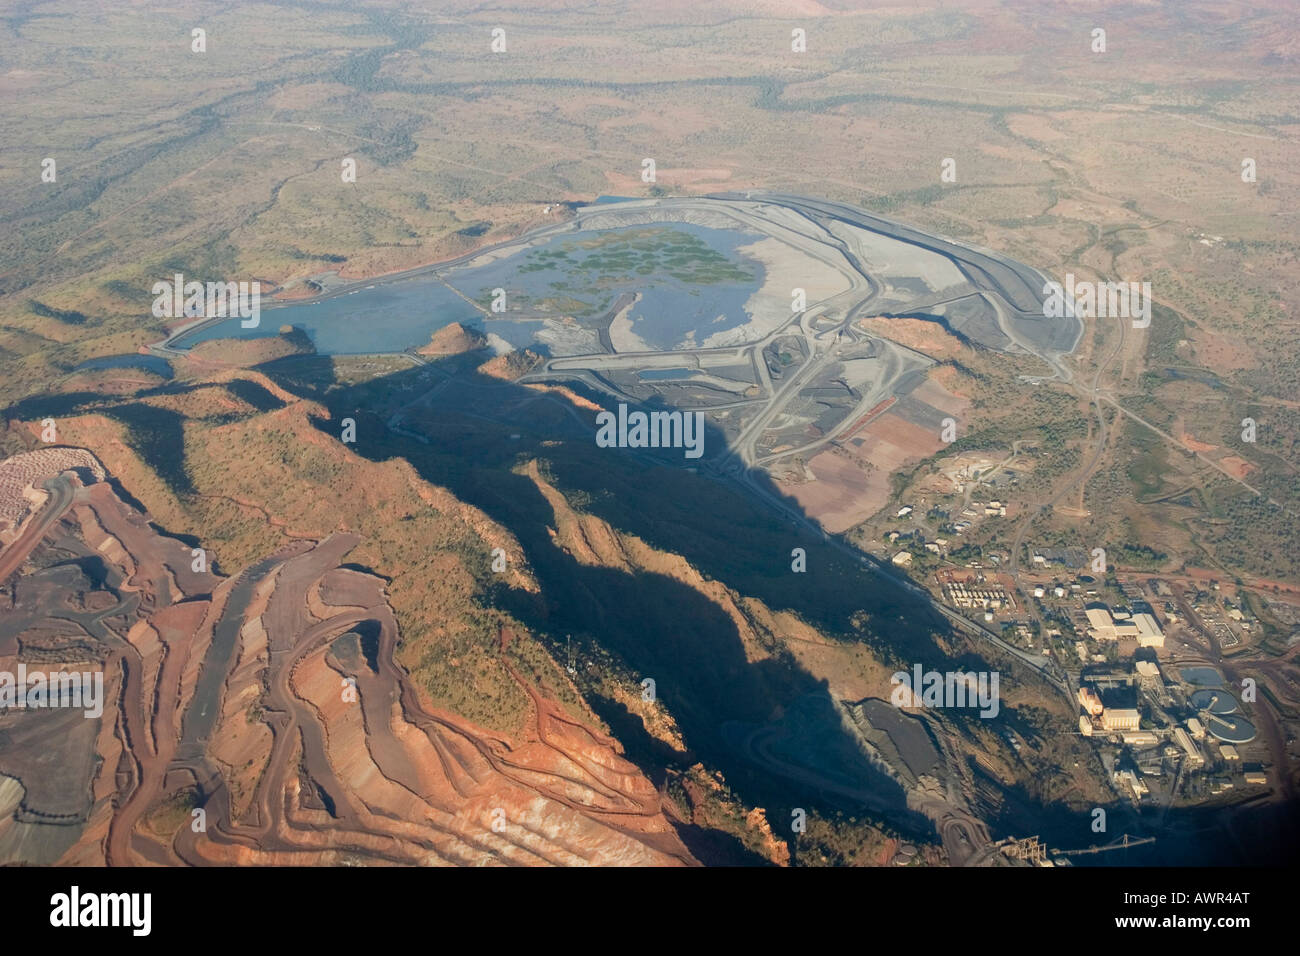 Argyle diamond mine, aerial view, Kimberley, Western Australia, WA, Australia Stock Photo